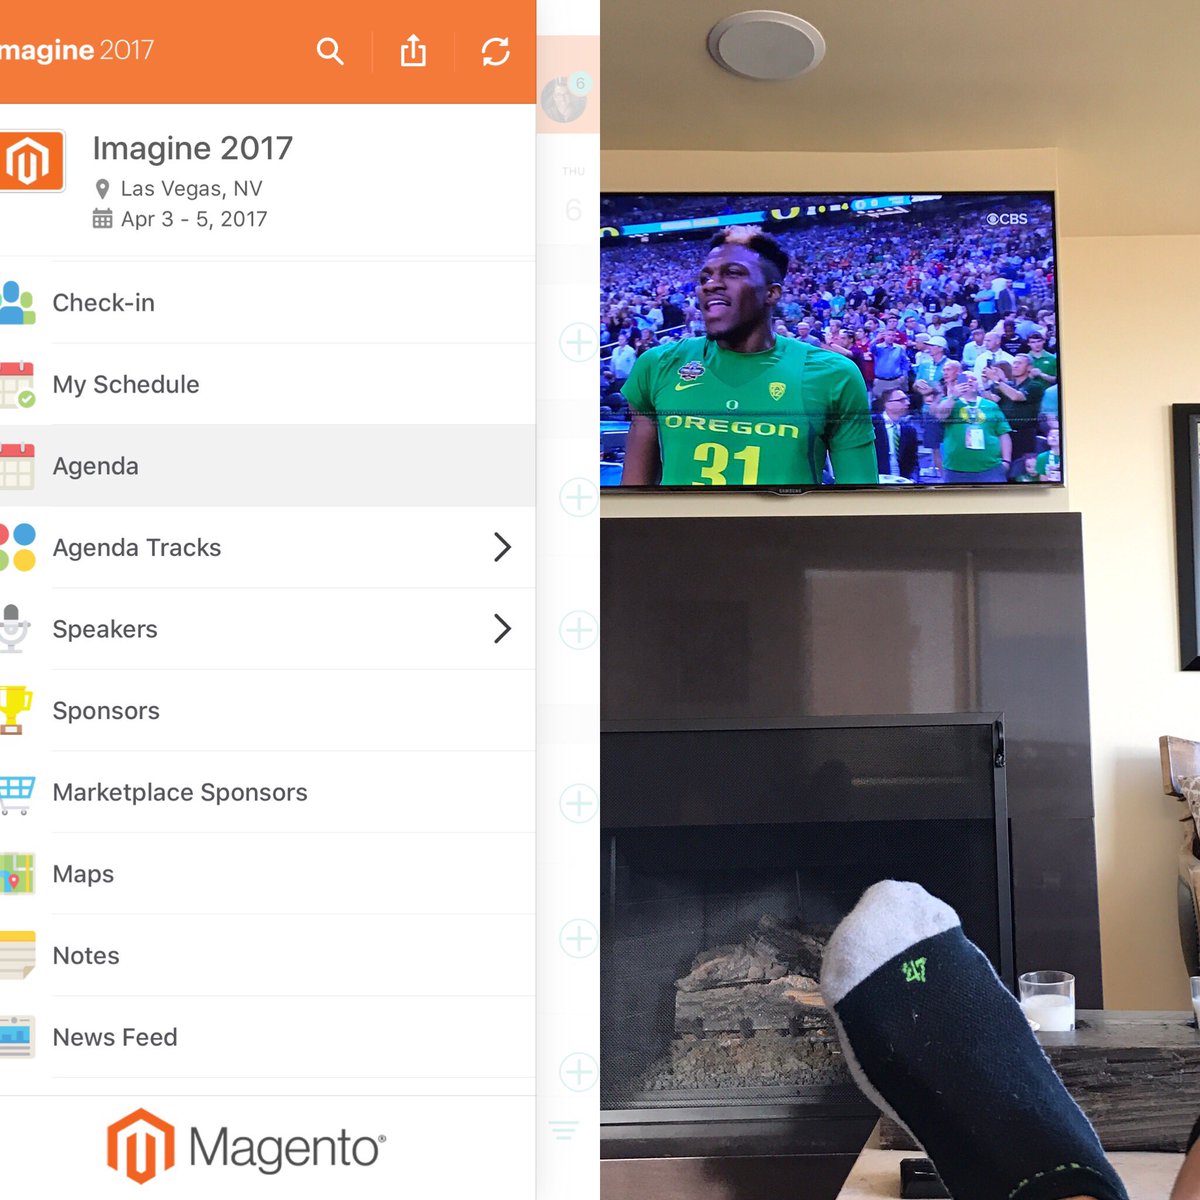 BobSchwartz: Watching final 4 games & while doing my #MagentoImagine schedule. @magento nice app! #RoadtoImagine @ZagMBB https://t.co/icZwXXPZkb